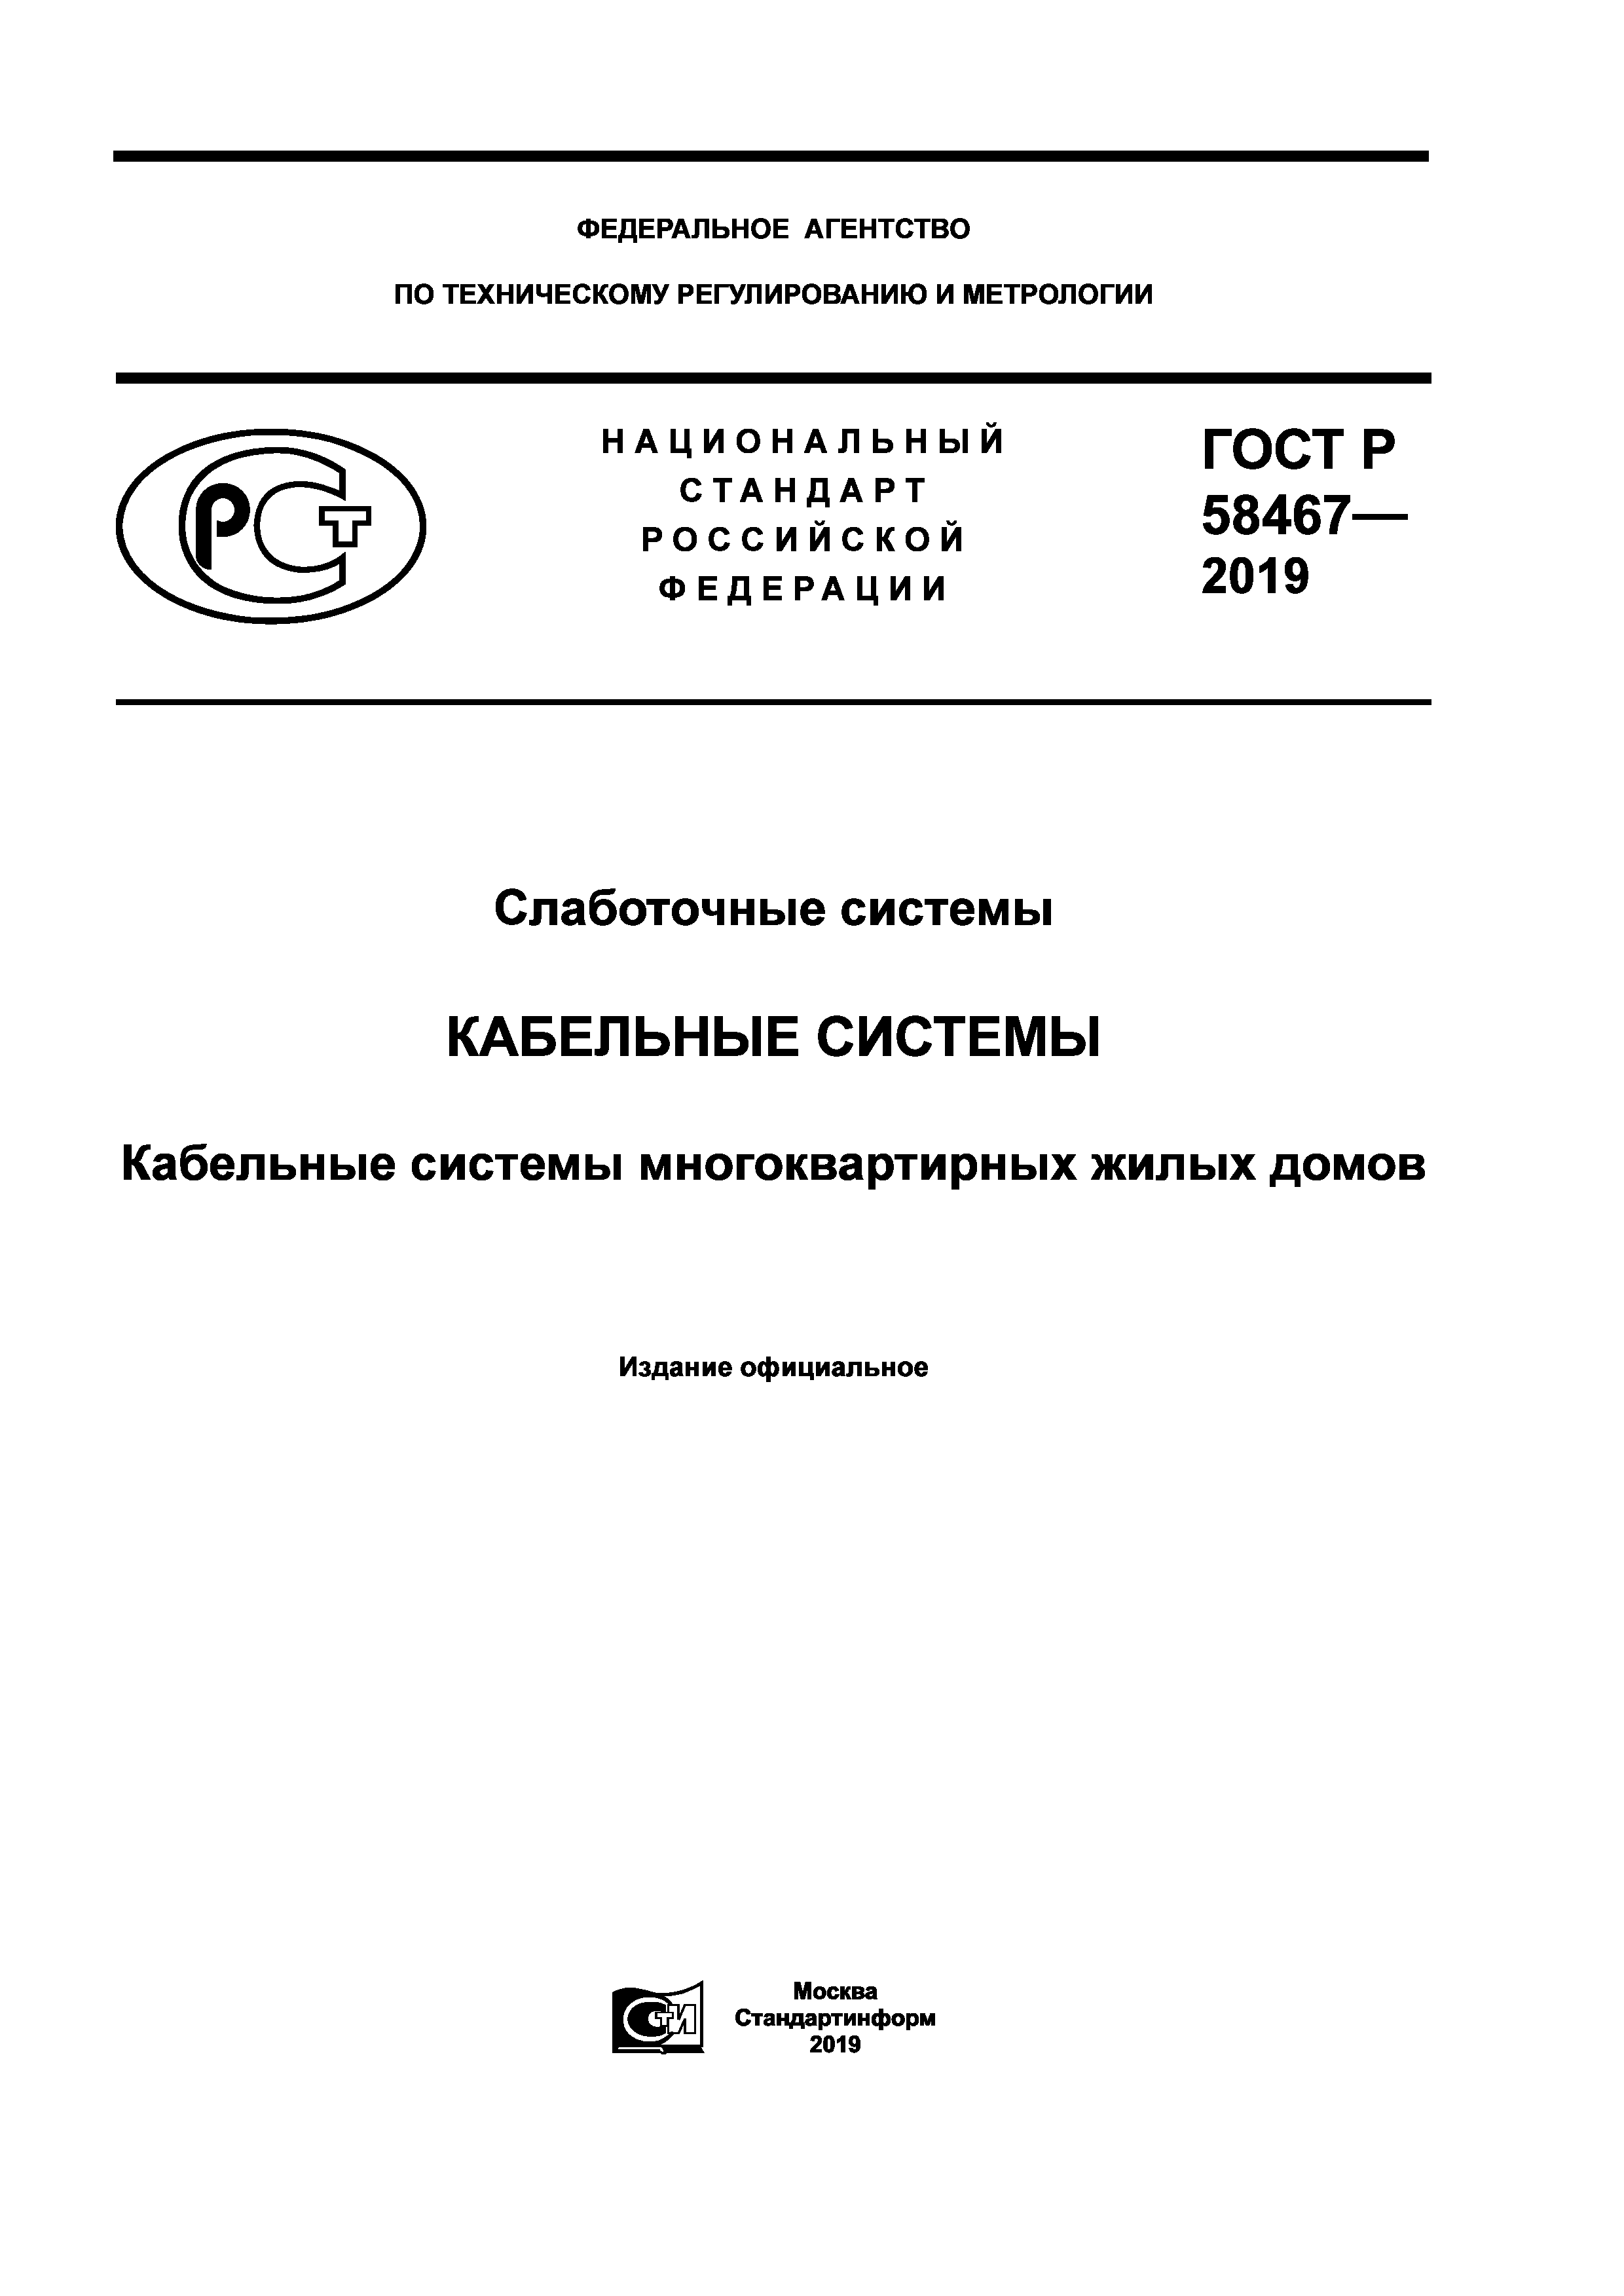 ГОСТ Р 58467-2019